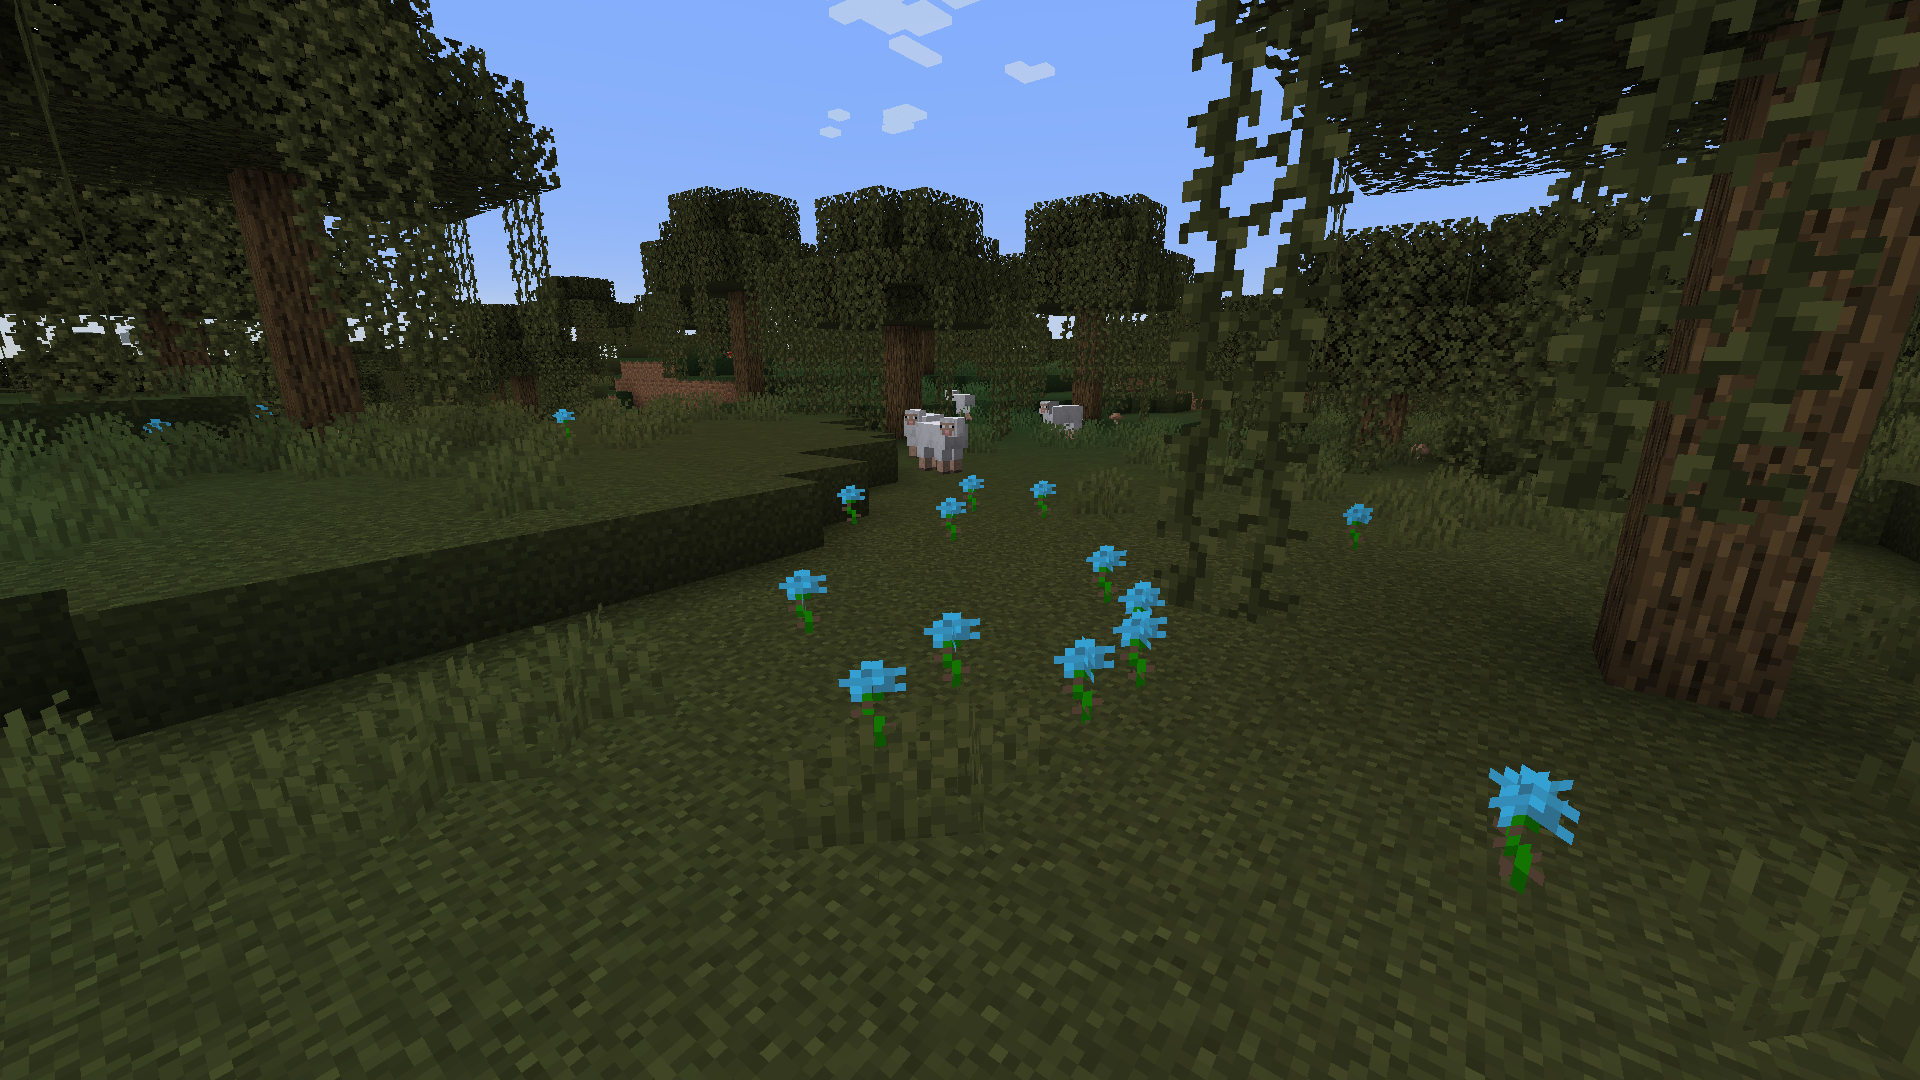 Blue Roses in their natural habitat.